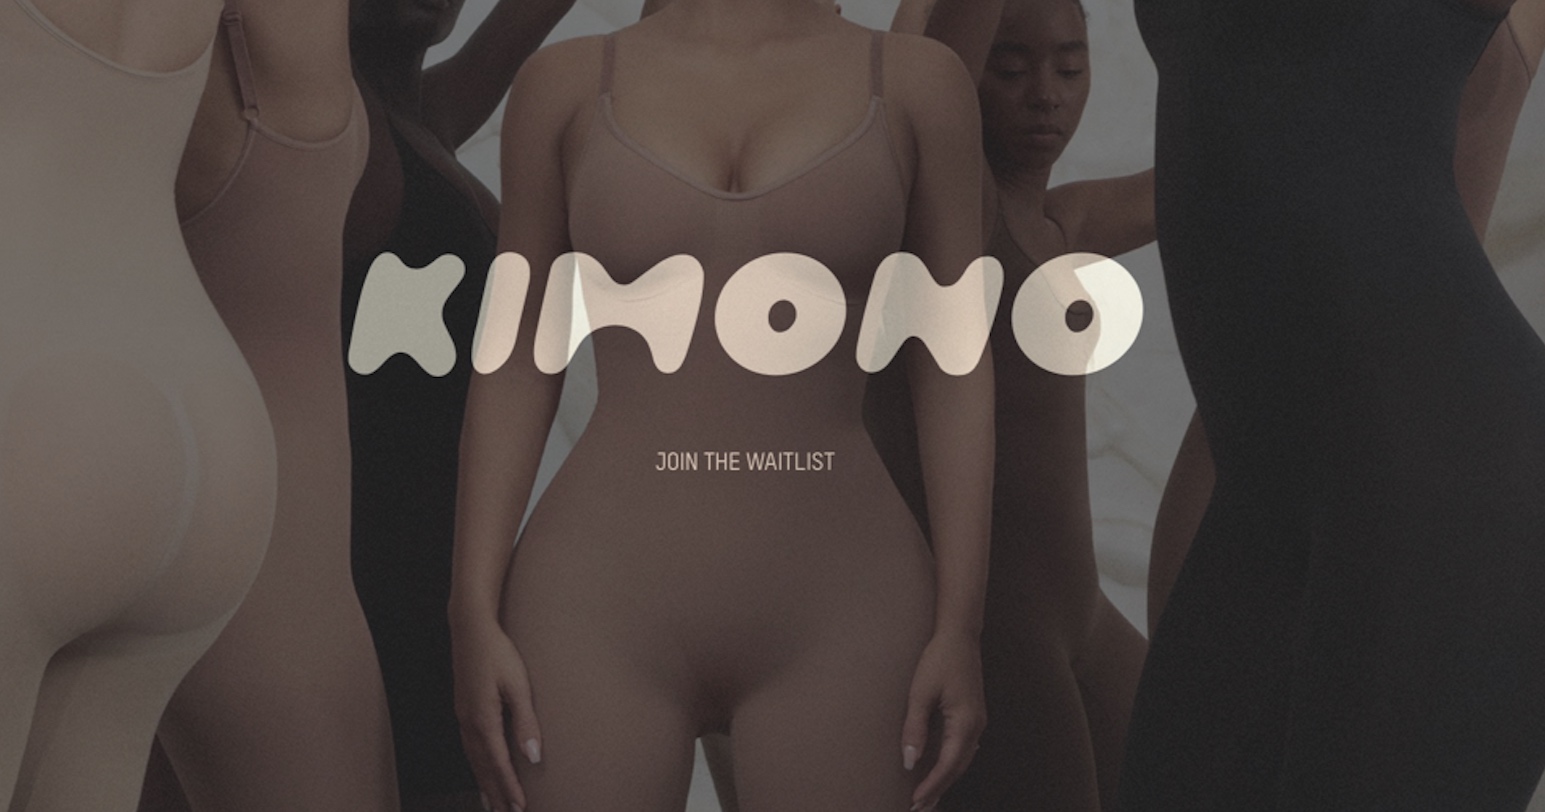 Kim Kardashian trademarks Kimono for shapewear and people aren't